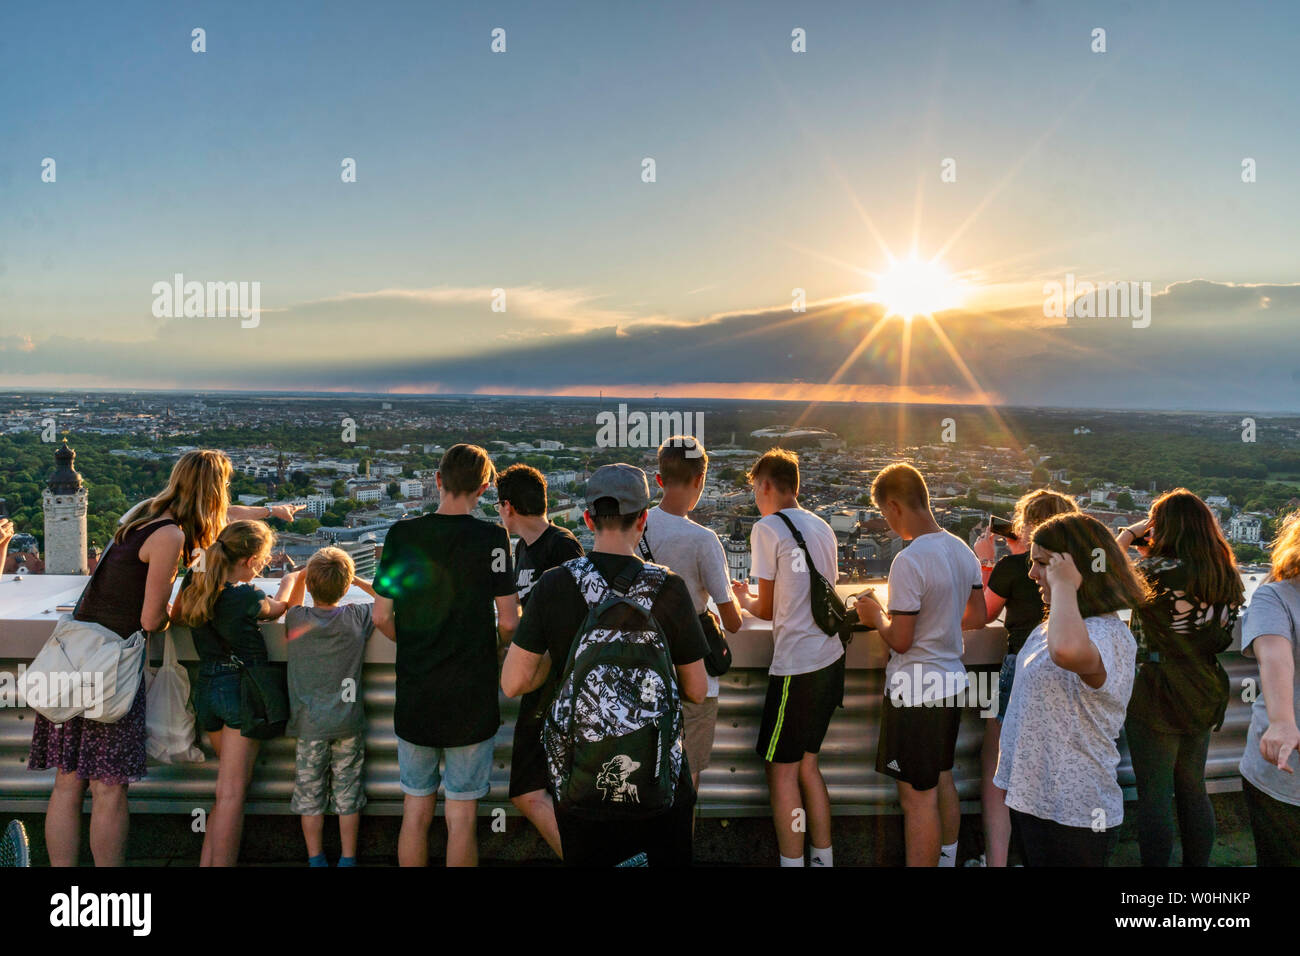 Panorama, Ausssichtsplattform City-Hochhaus, Lipsia, Sachsen, Deutschland | Scrivania di osservazione, city tower, visitatori, tramonto, Lipsia, Foto Stock